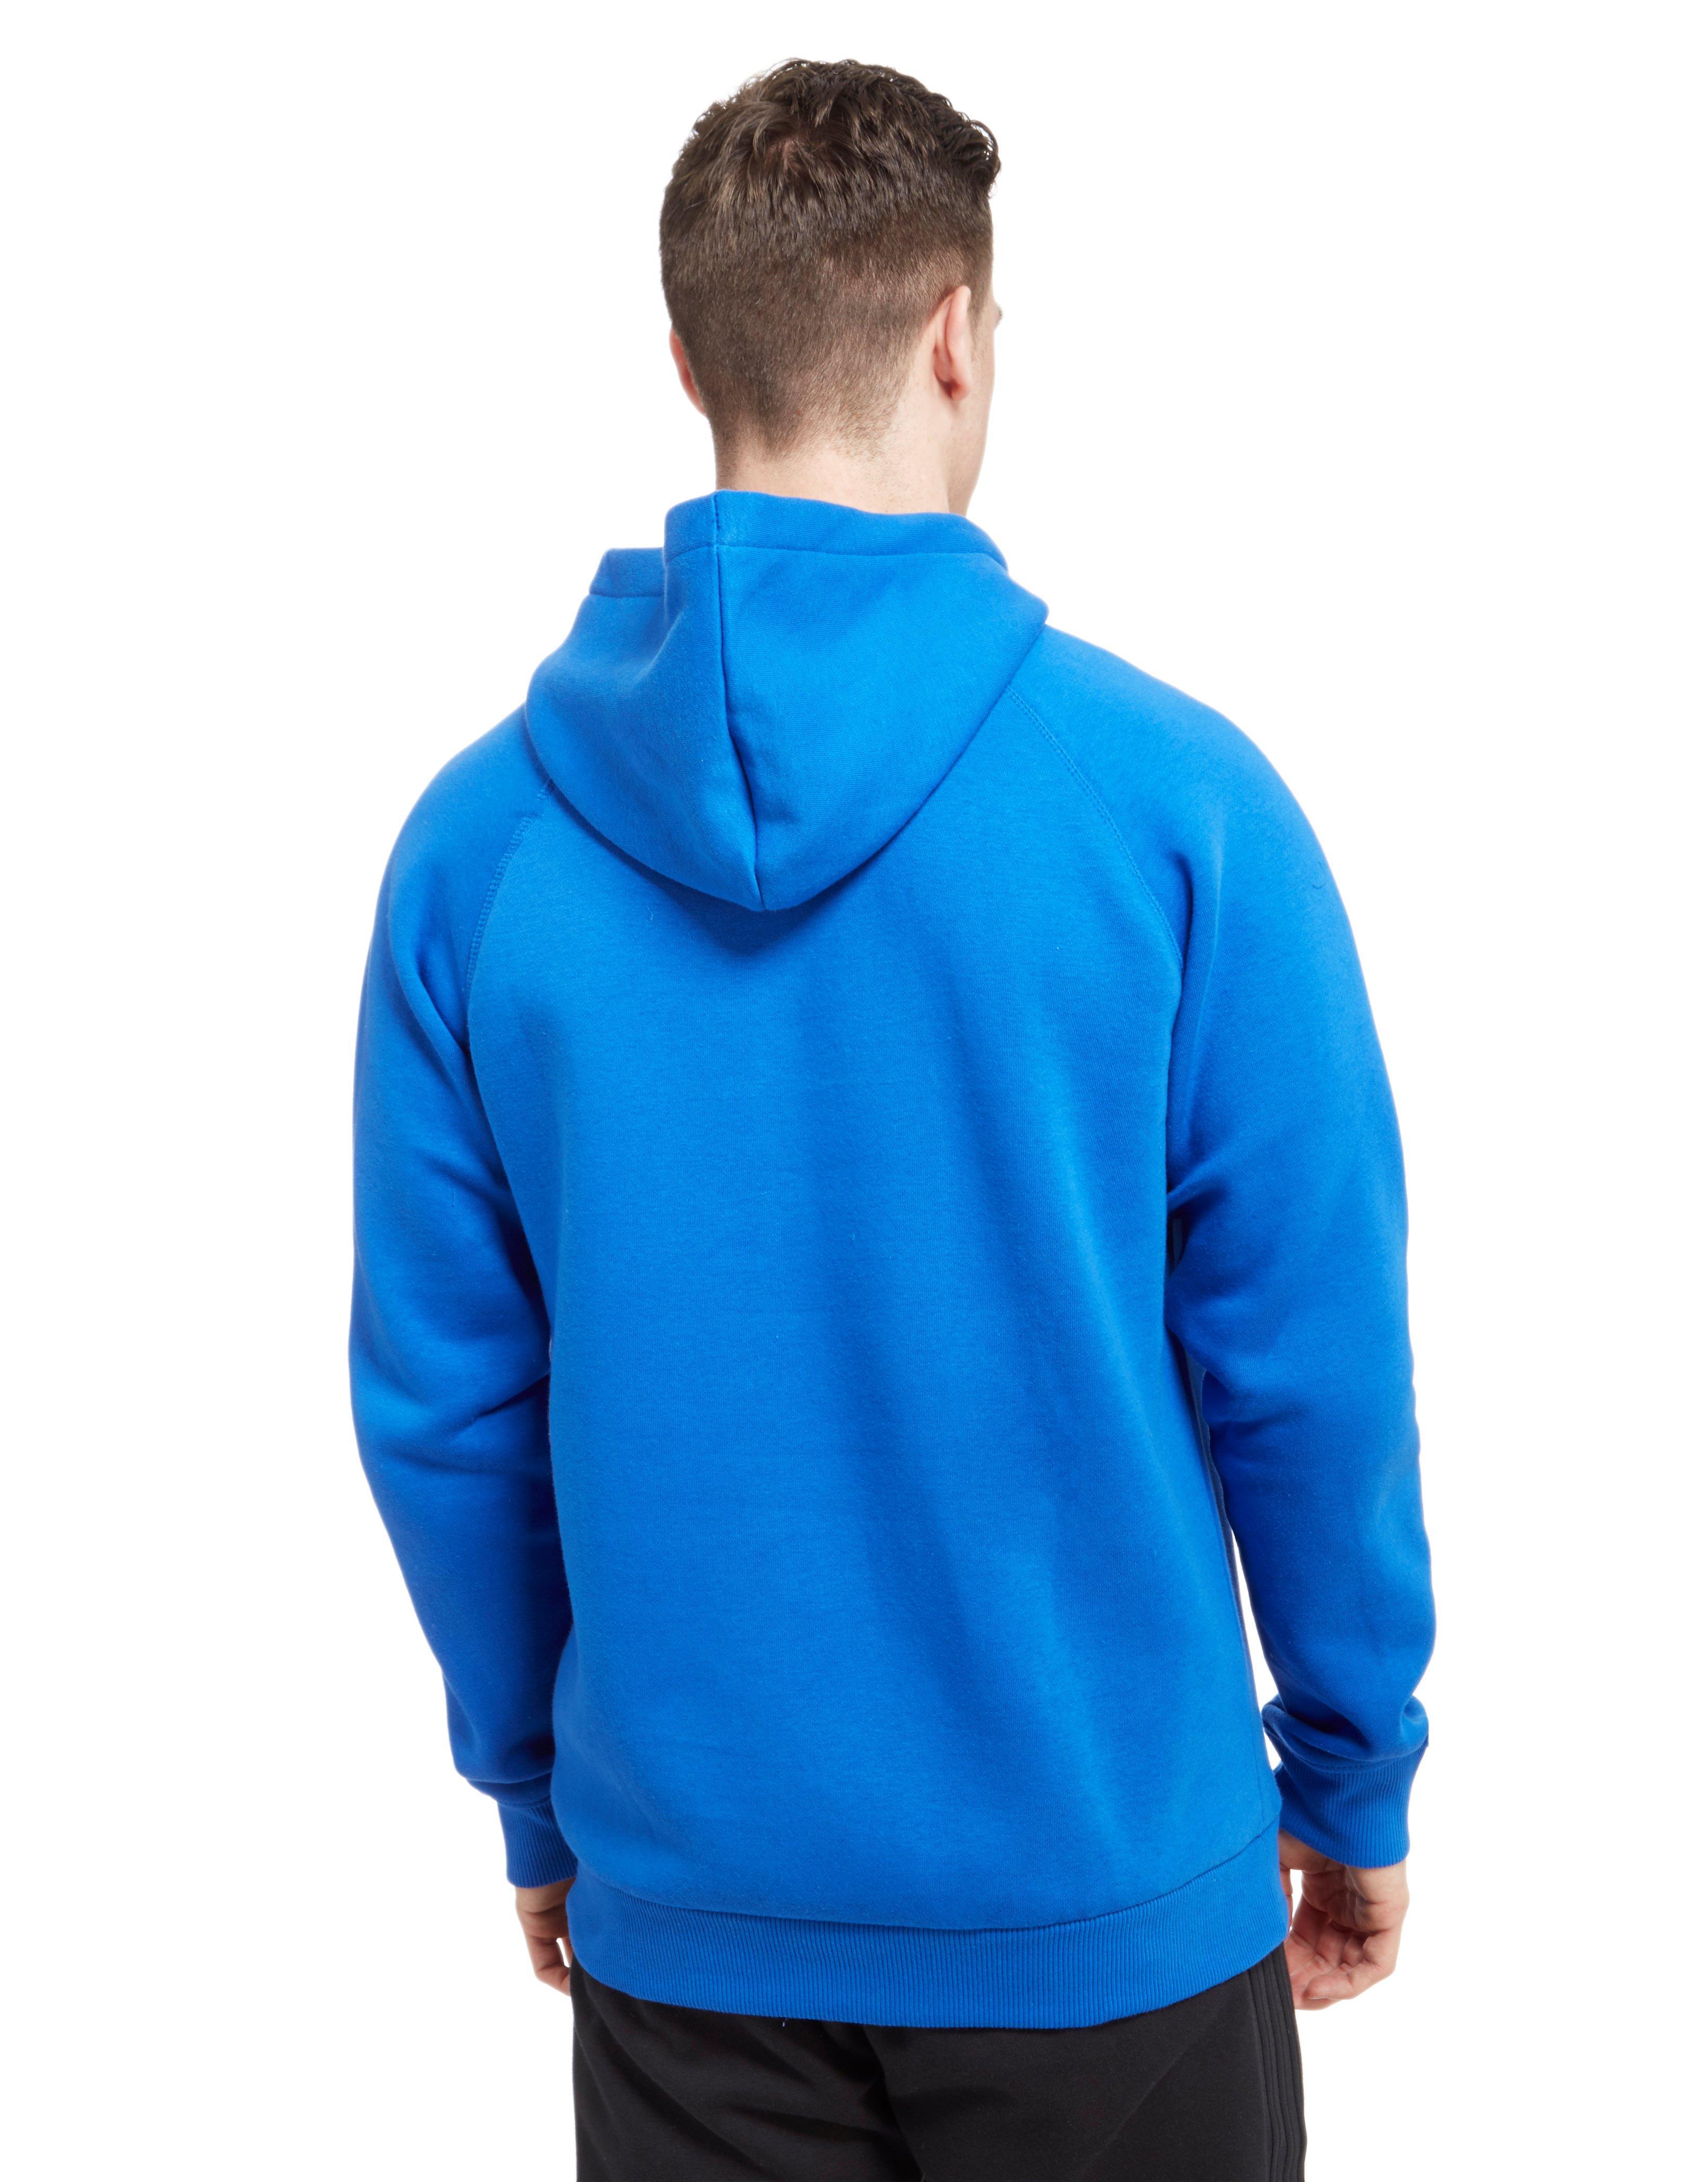 Lyst - Adidas Trefoil Hoodie in Blue for Men